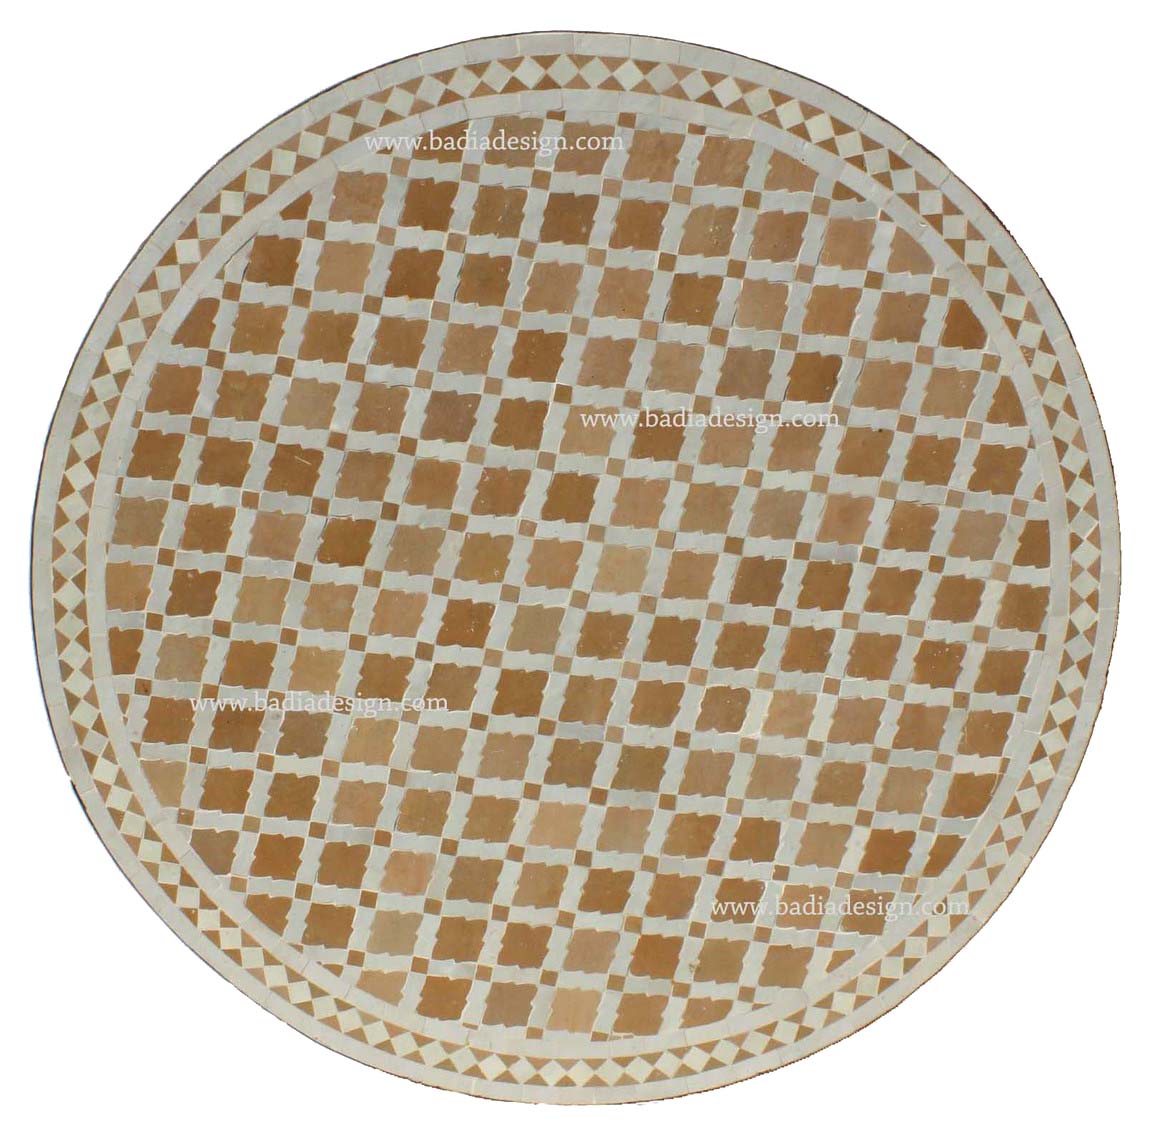 mosaic-patio-tile-table-design-mtr461.jpg